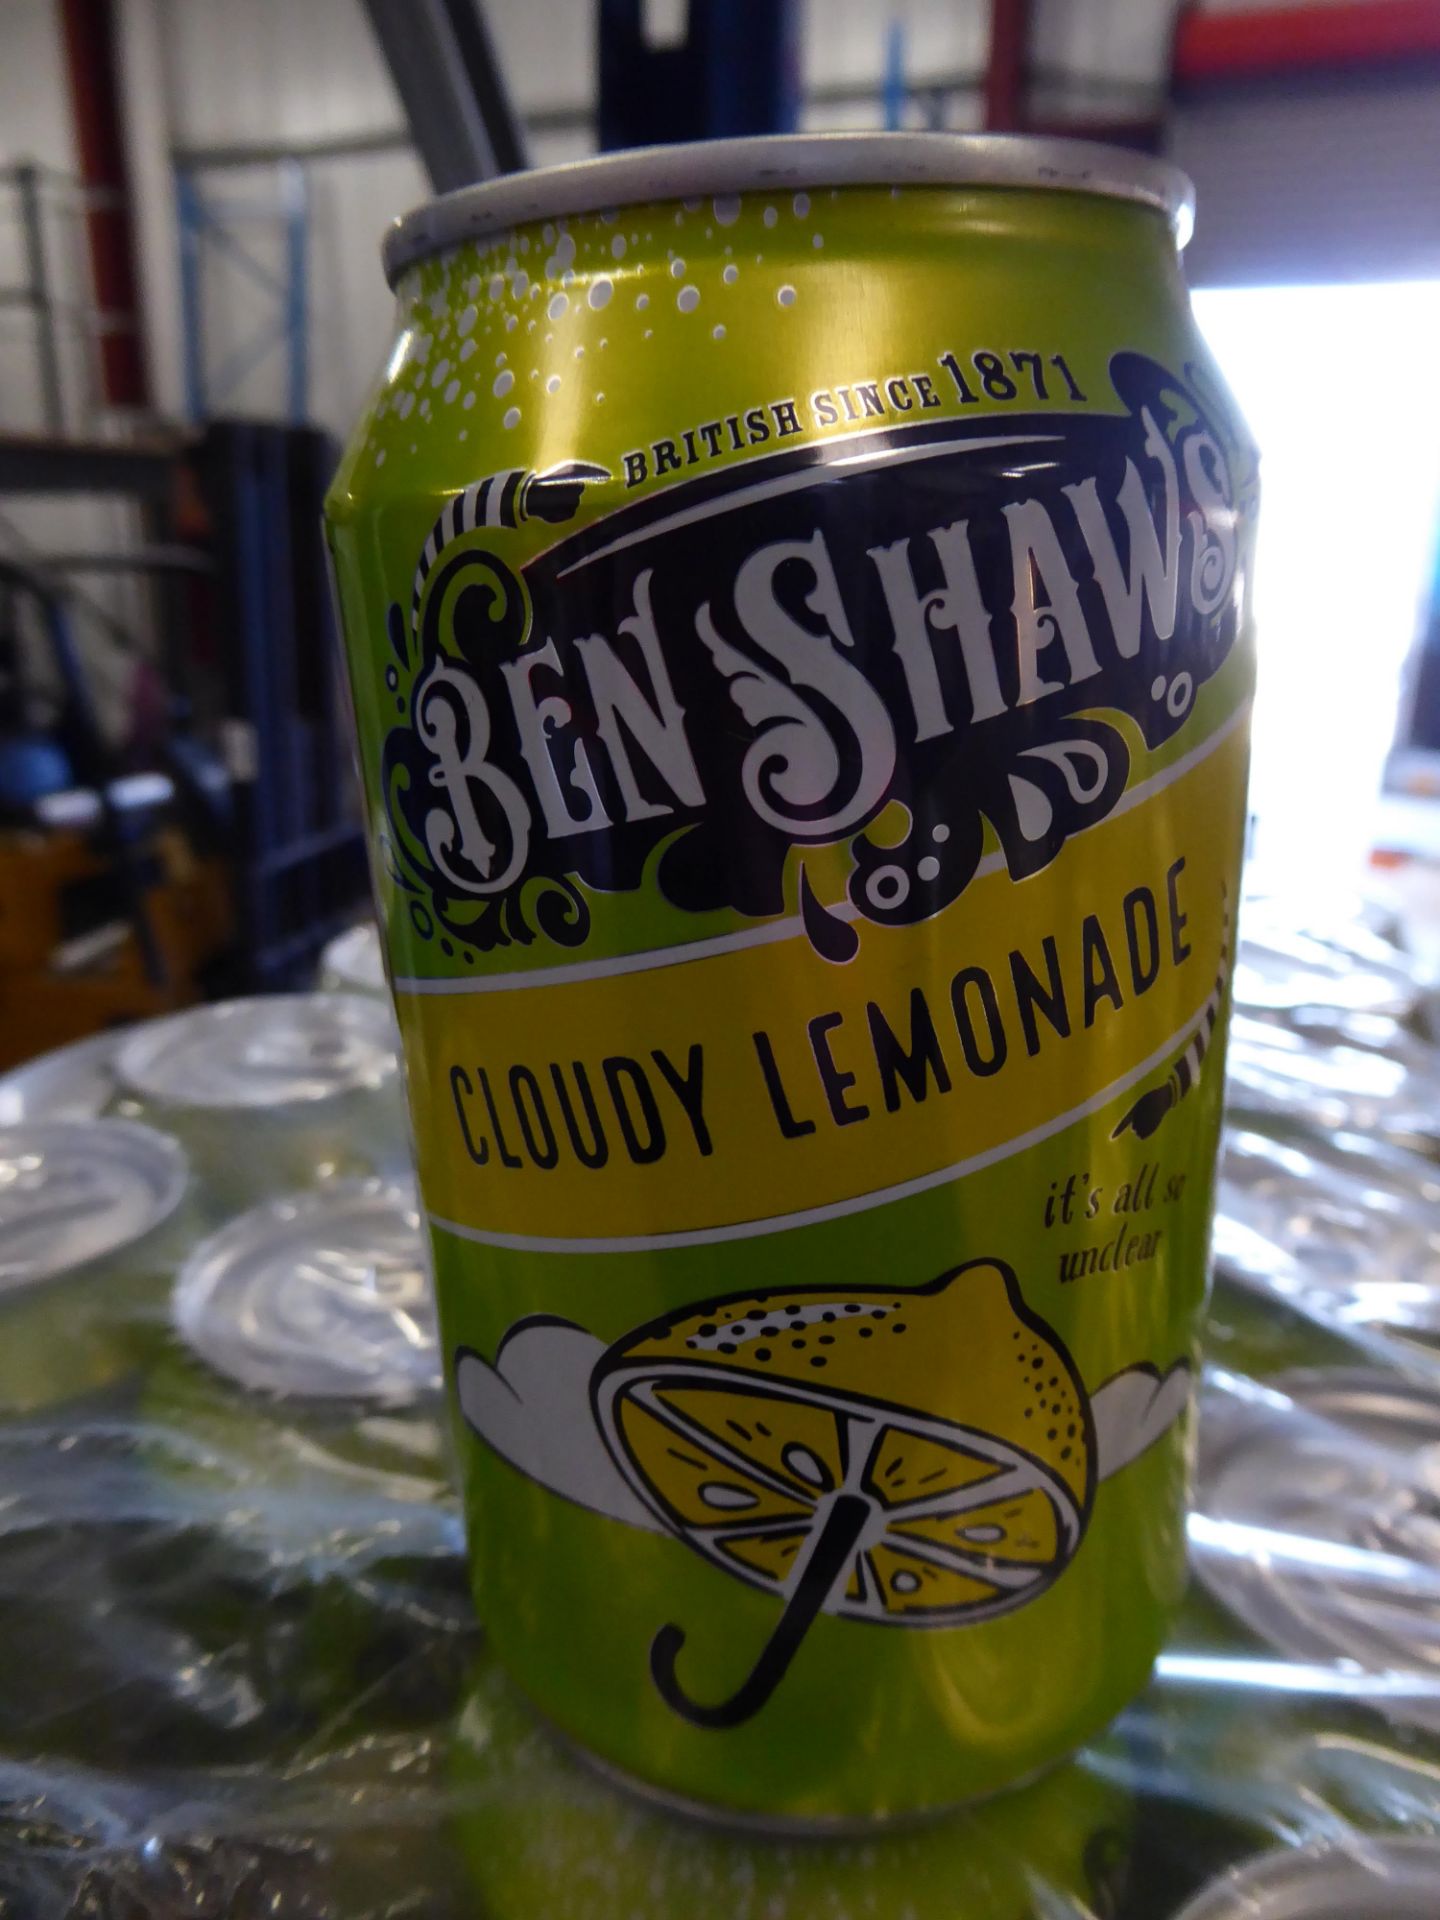 *1 full + 1 part case Ben Shaws cloudy lemonade - Image 2 of 2